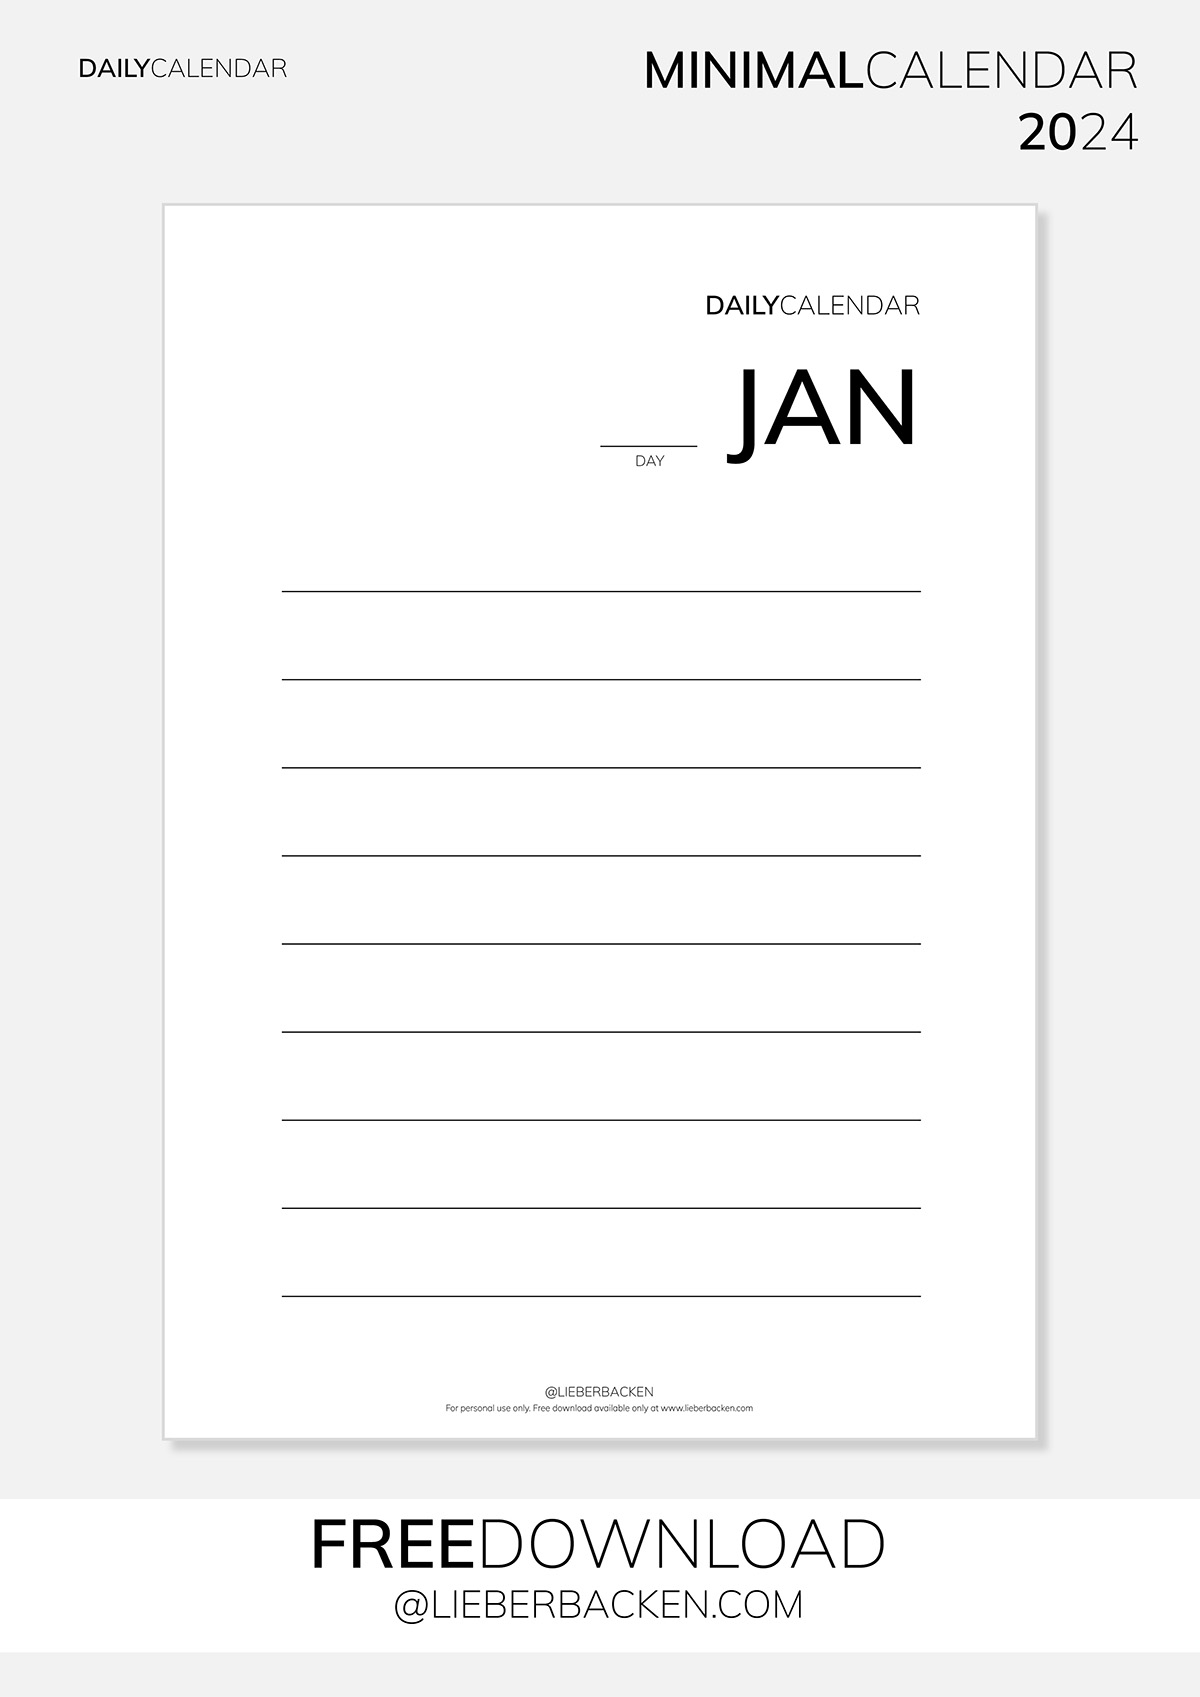 Minimal Calendar Daily Calendar | Tagesübersicht: Gratis herunterladen